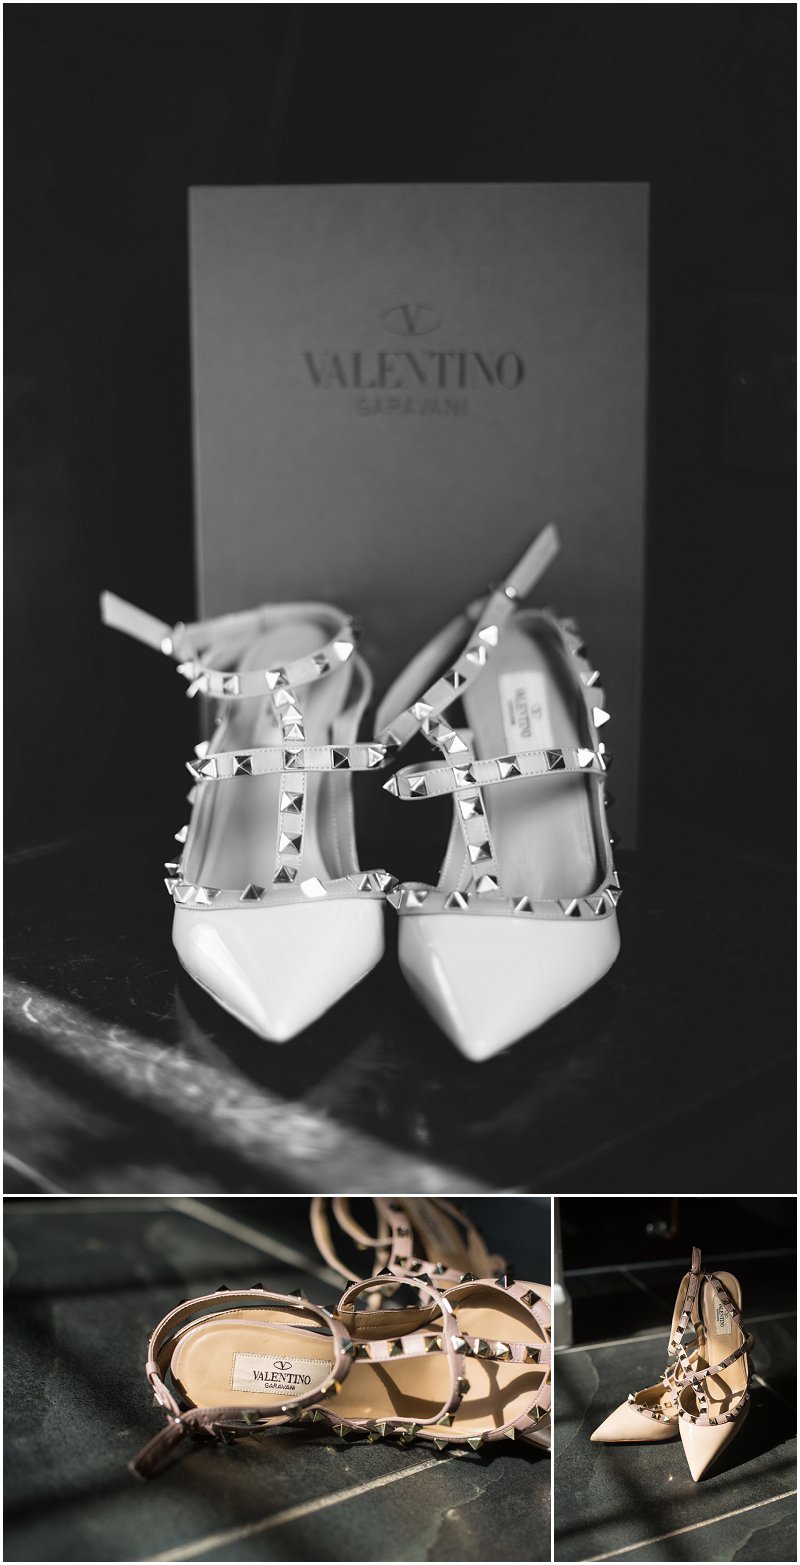 Valentino Designer Wedding Shoes 